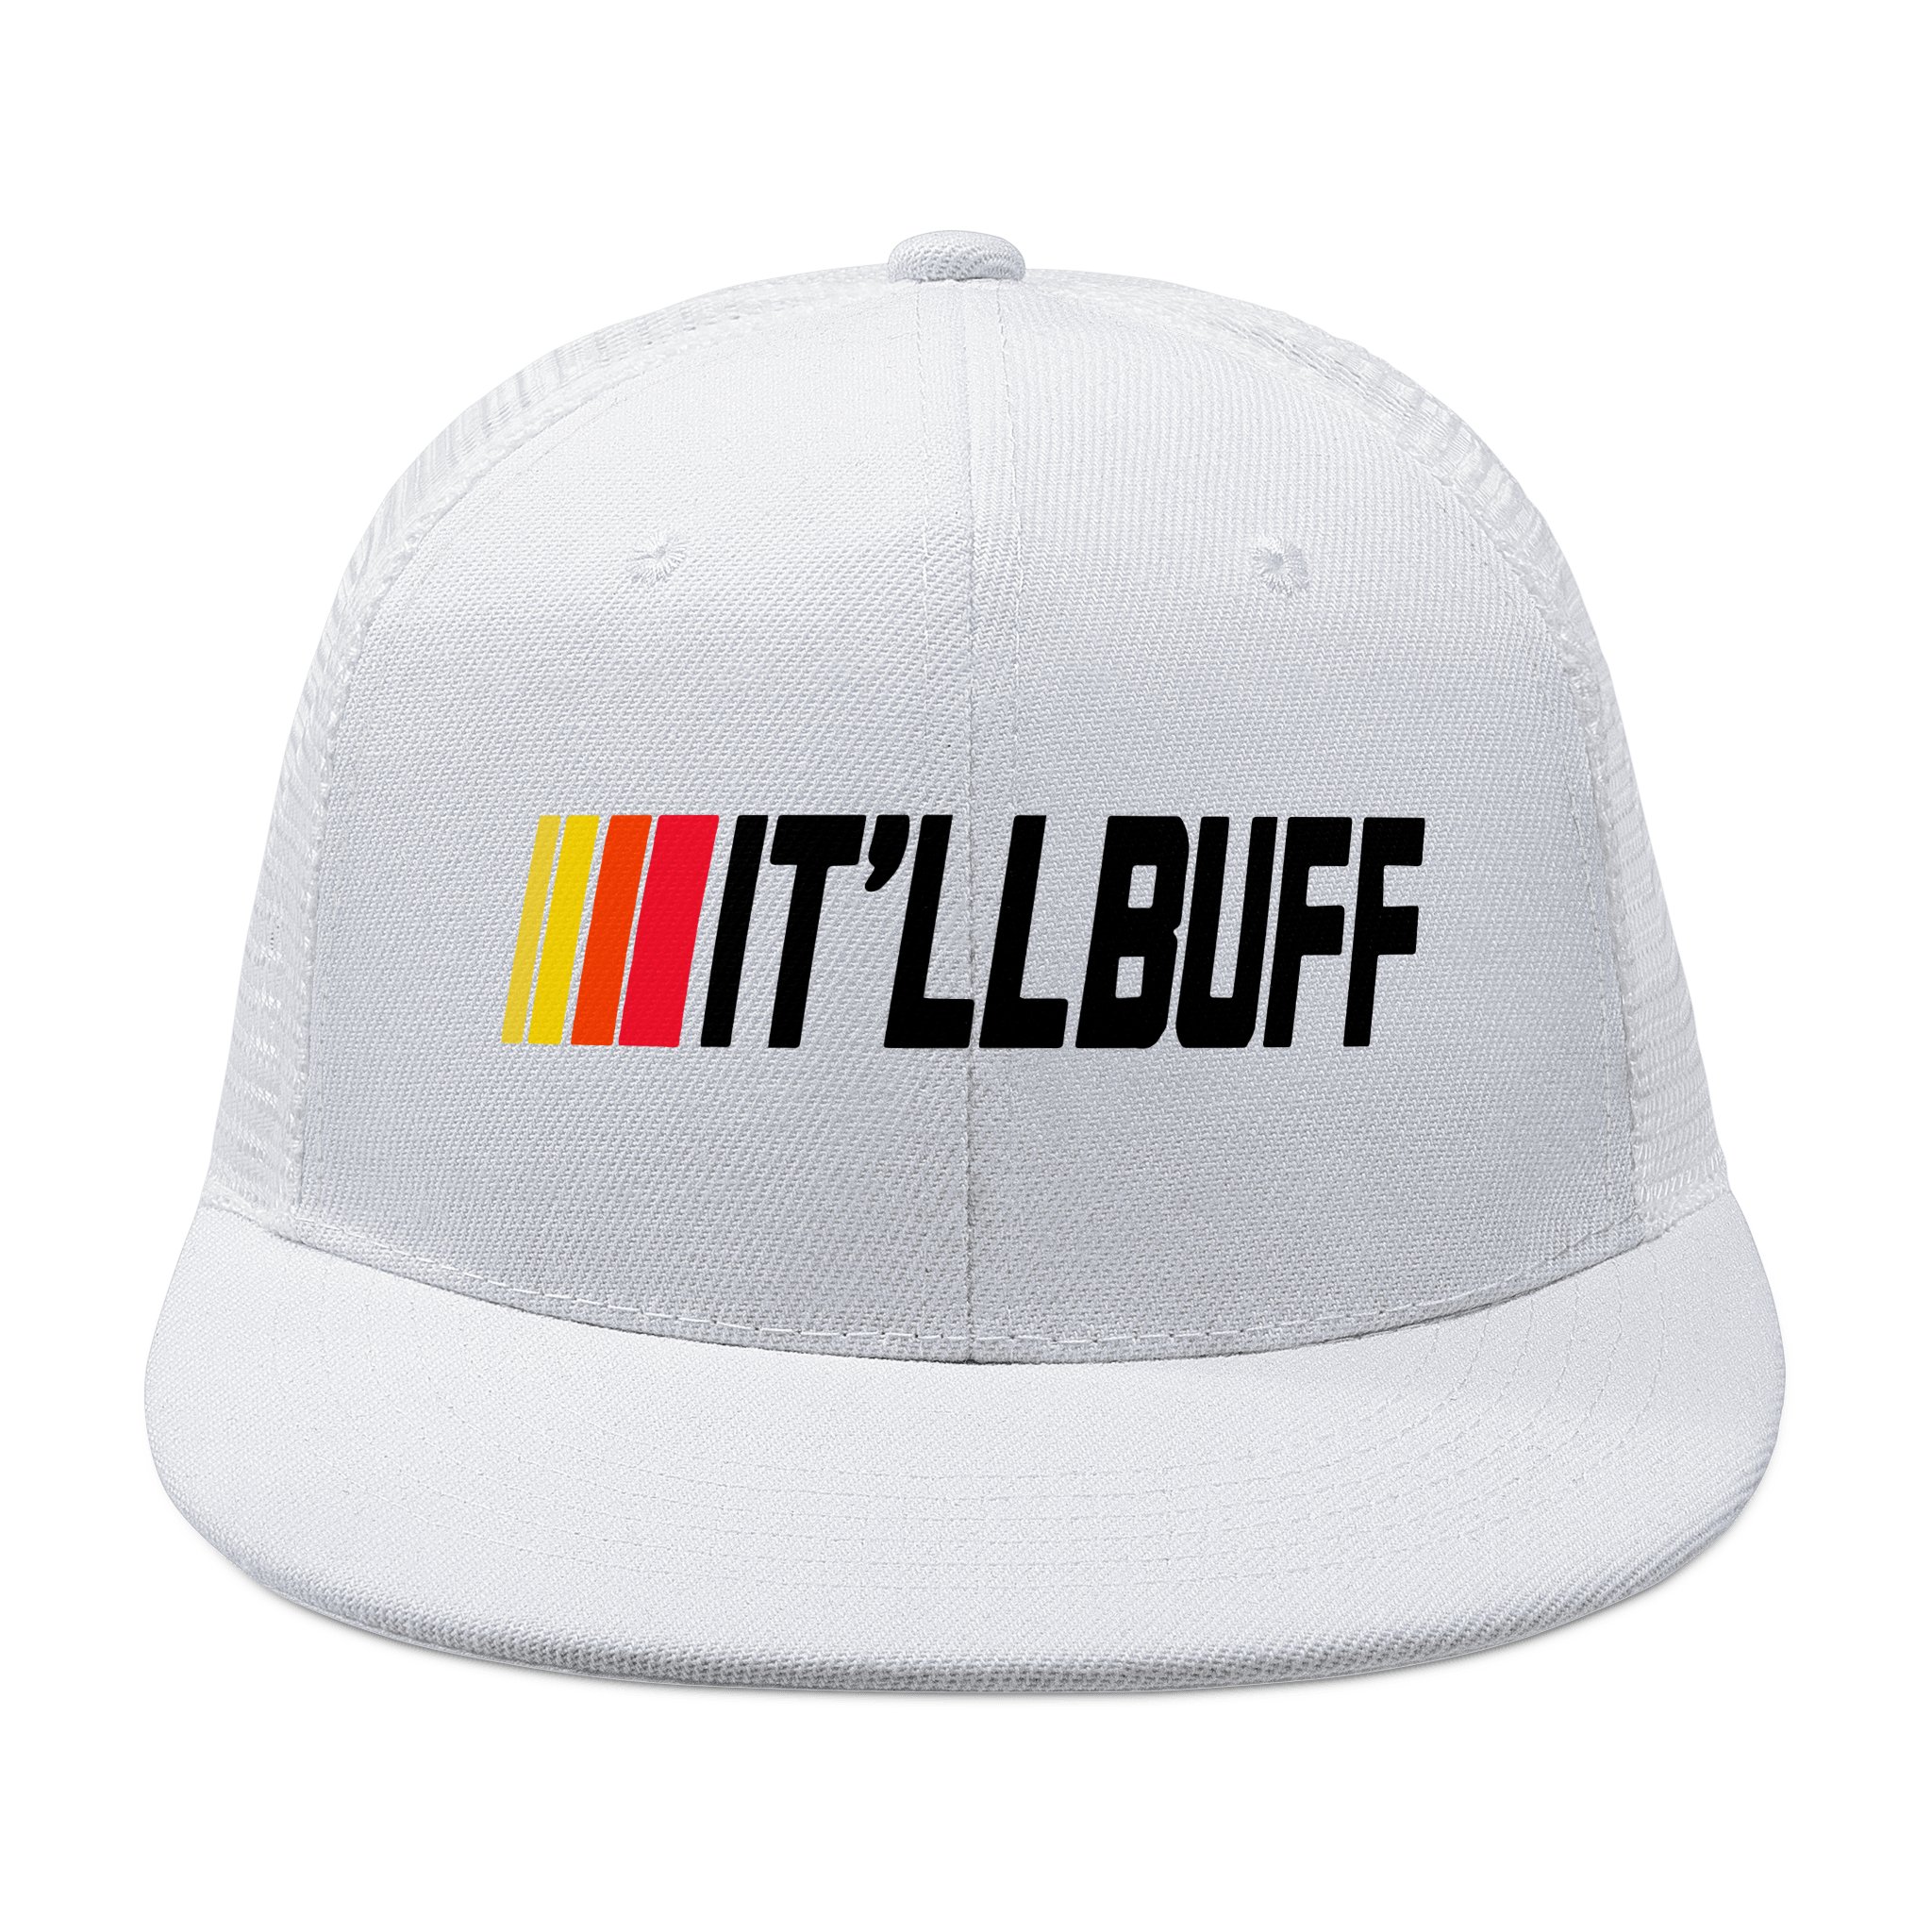 The Buff ® online store on Trekkinn